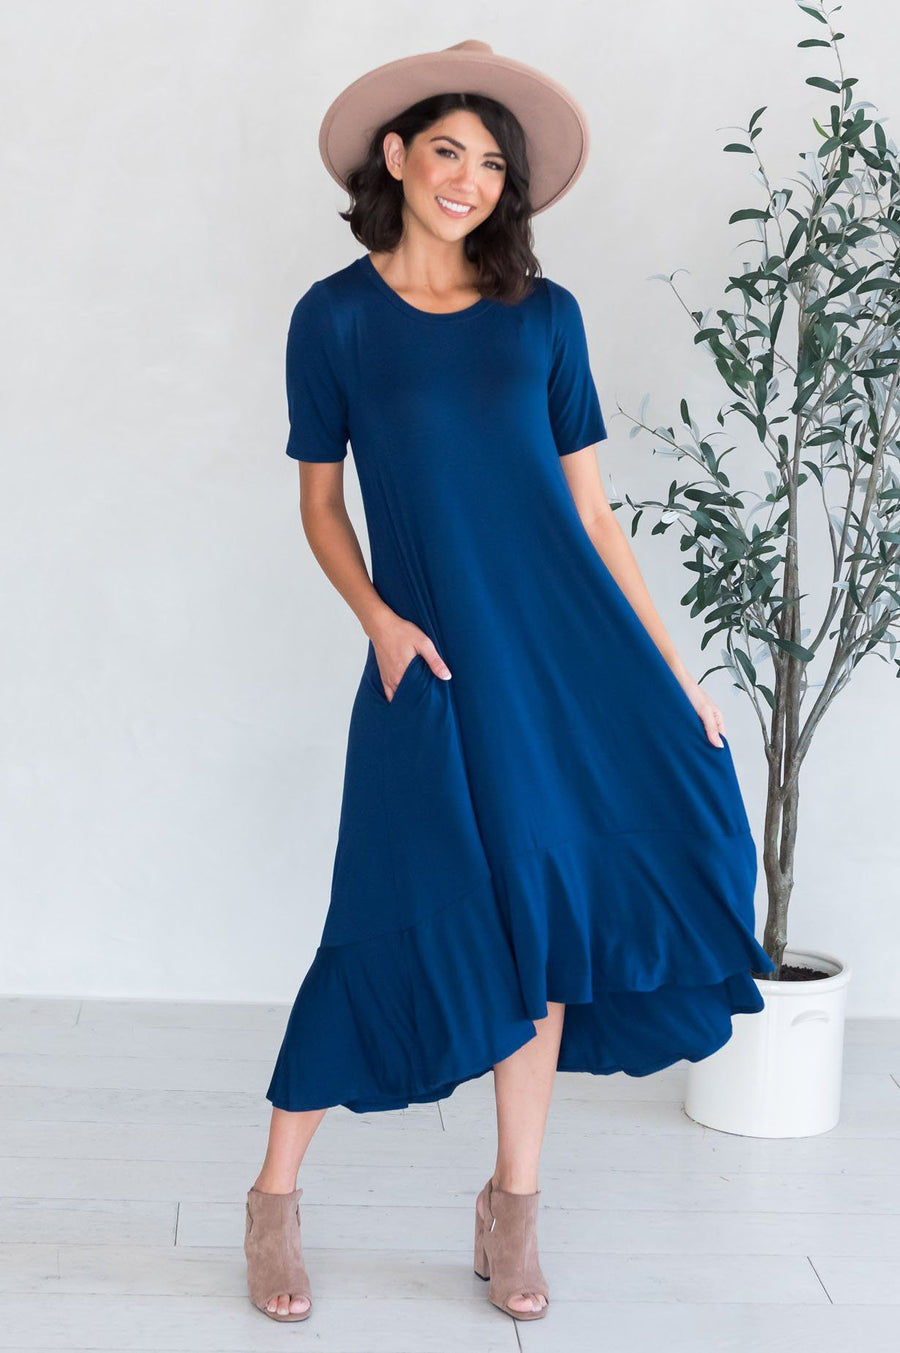 Modest Swing Dresses for Women - Online Boutique - NeeSee's Dresses